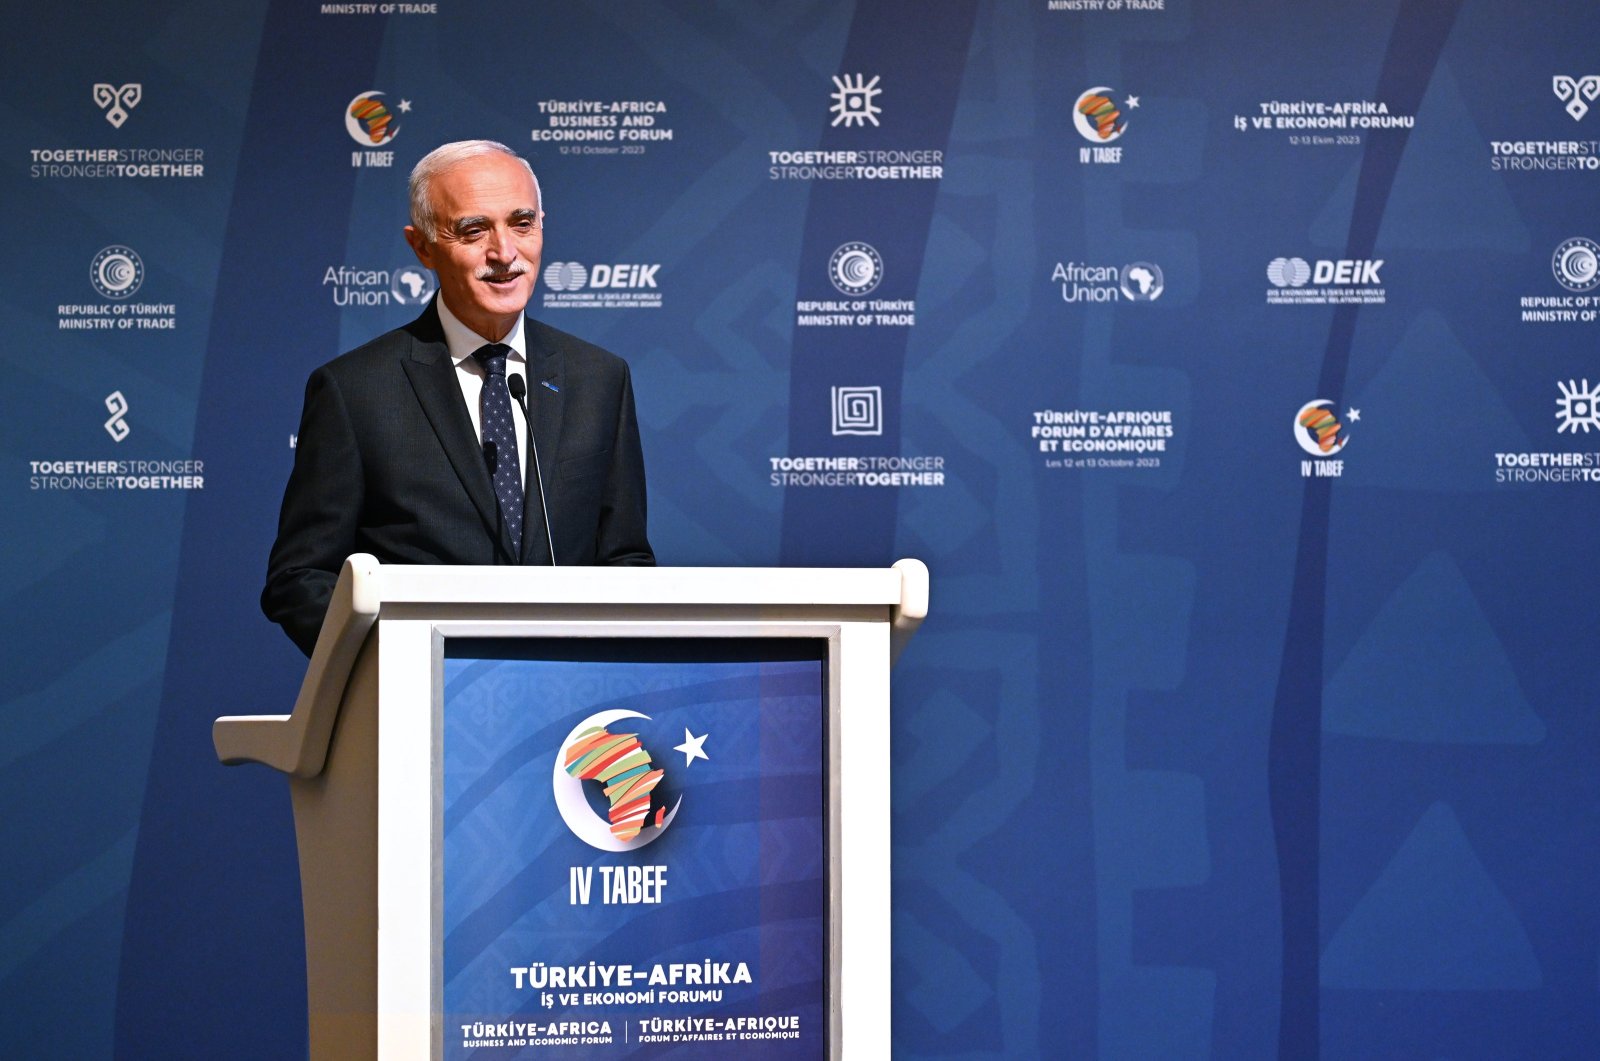 Türkiye-Africa business forum fosters new ties for $50B trade goal